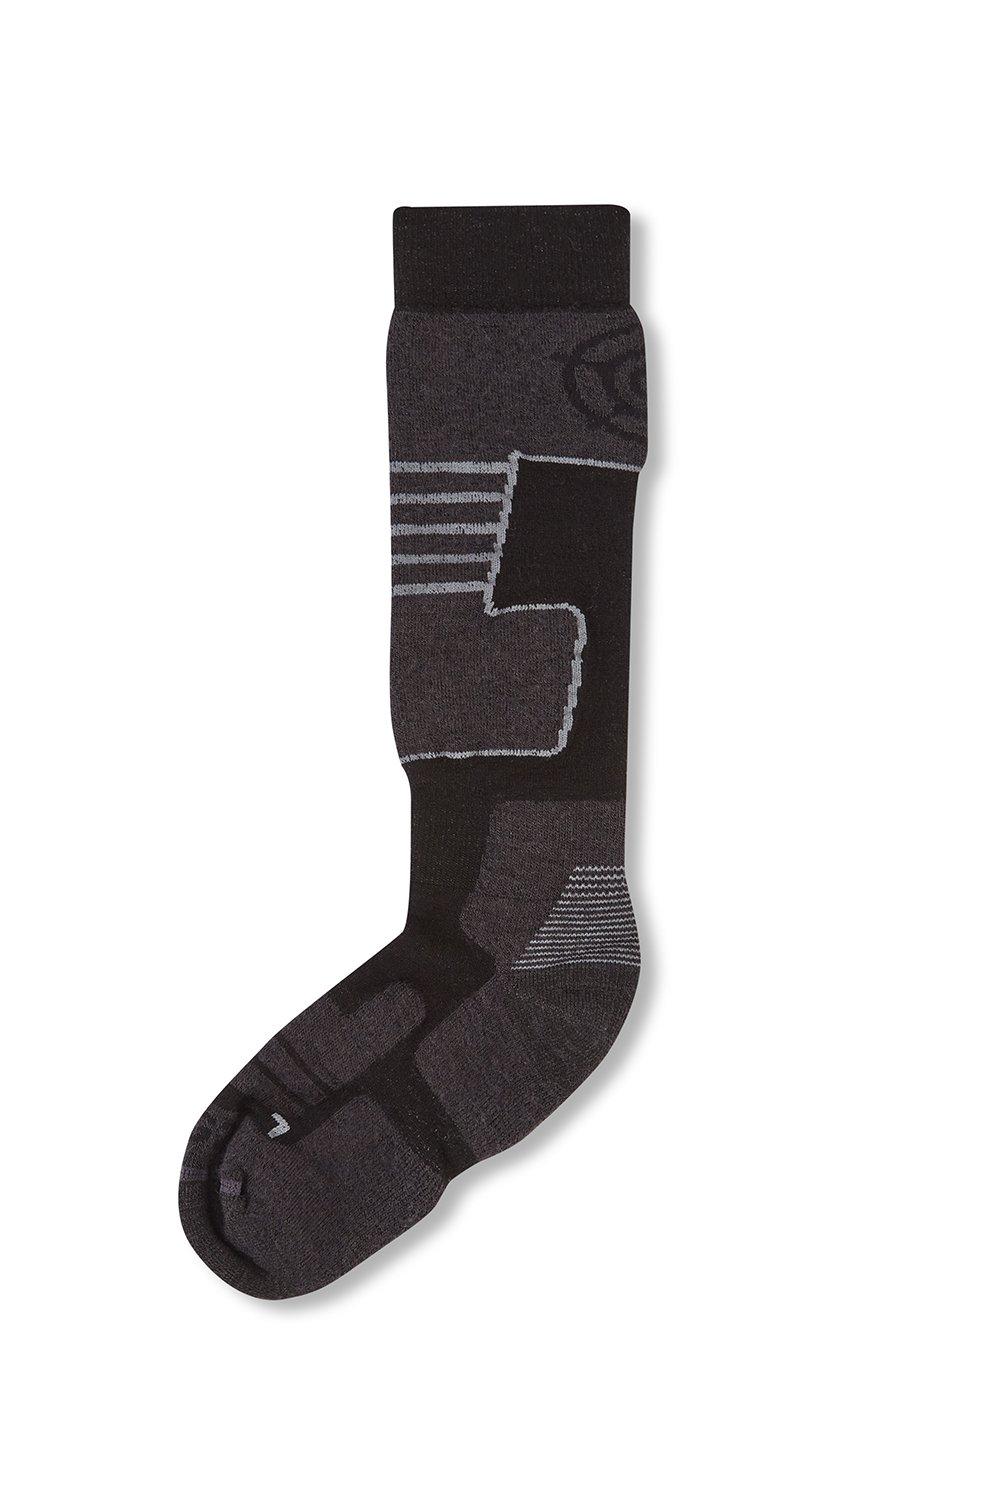 'Scheffau' Merino Ski Socks